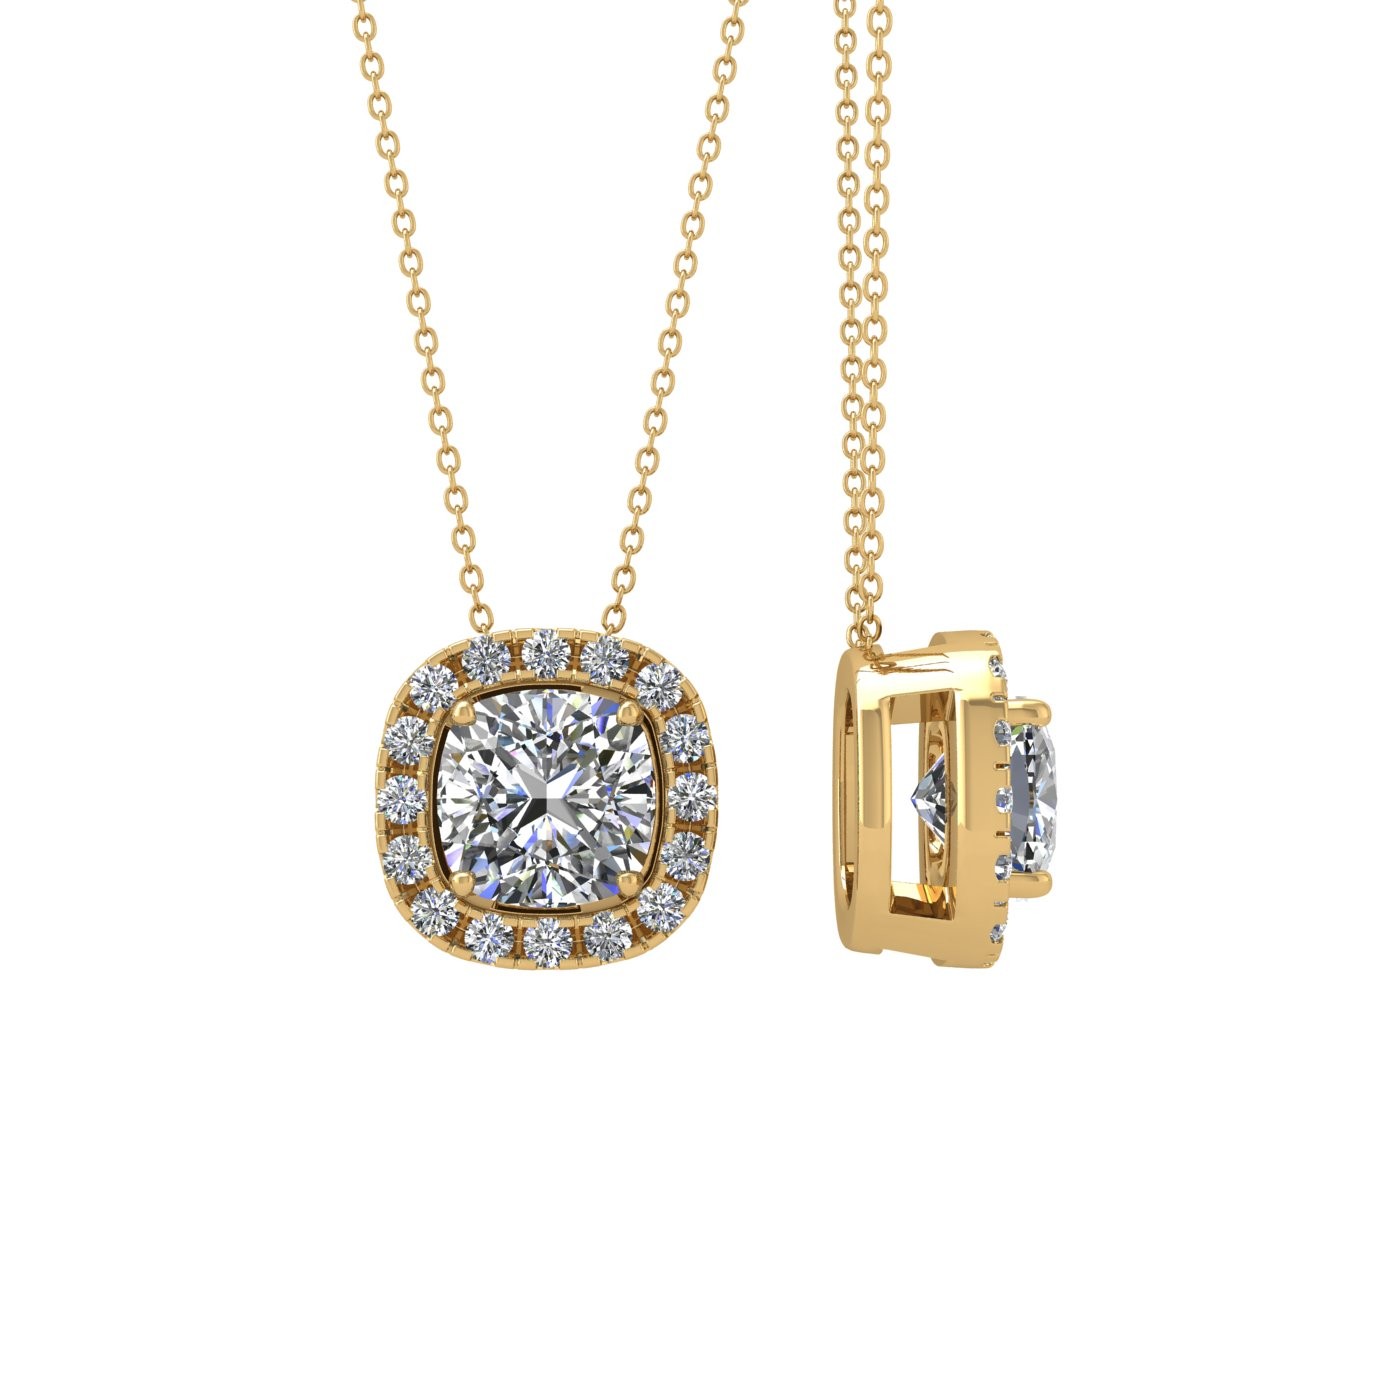 18k yellow gold 0,5 ct 4 prongs cushion shape diamond pendant with diamond pavÉ set halo